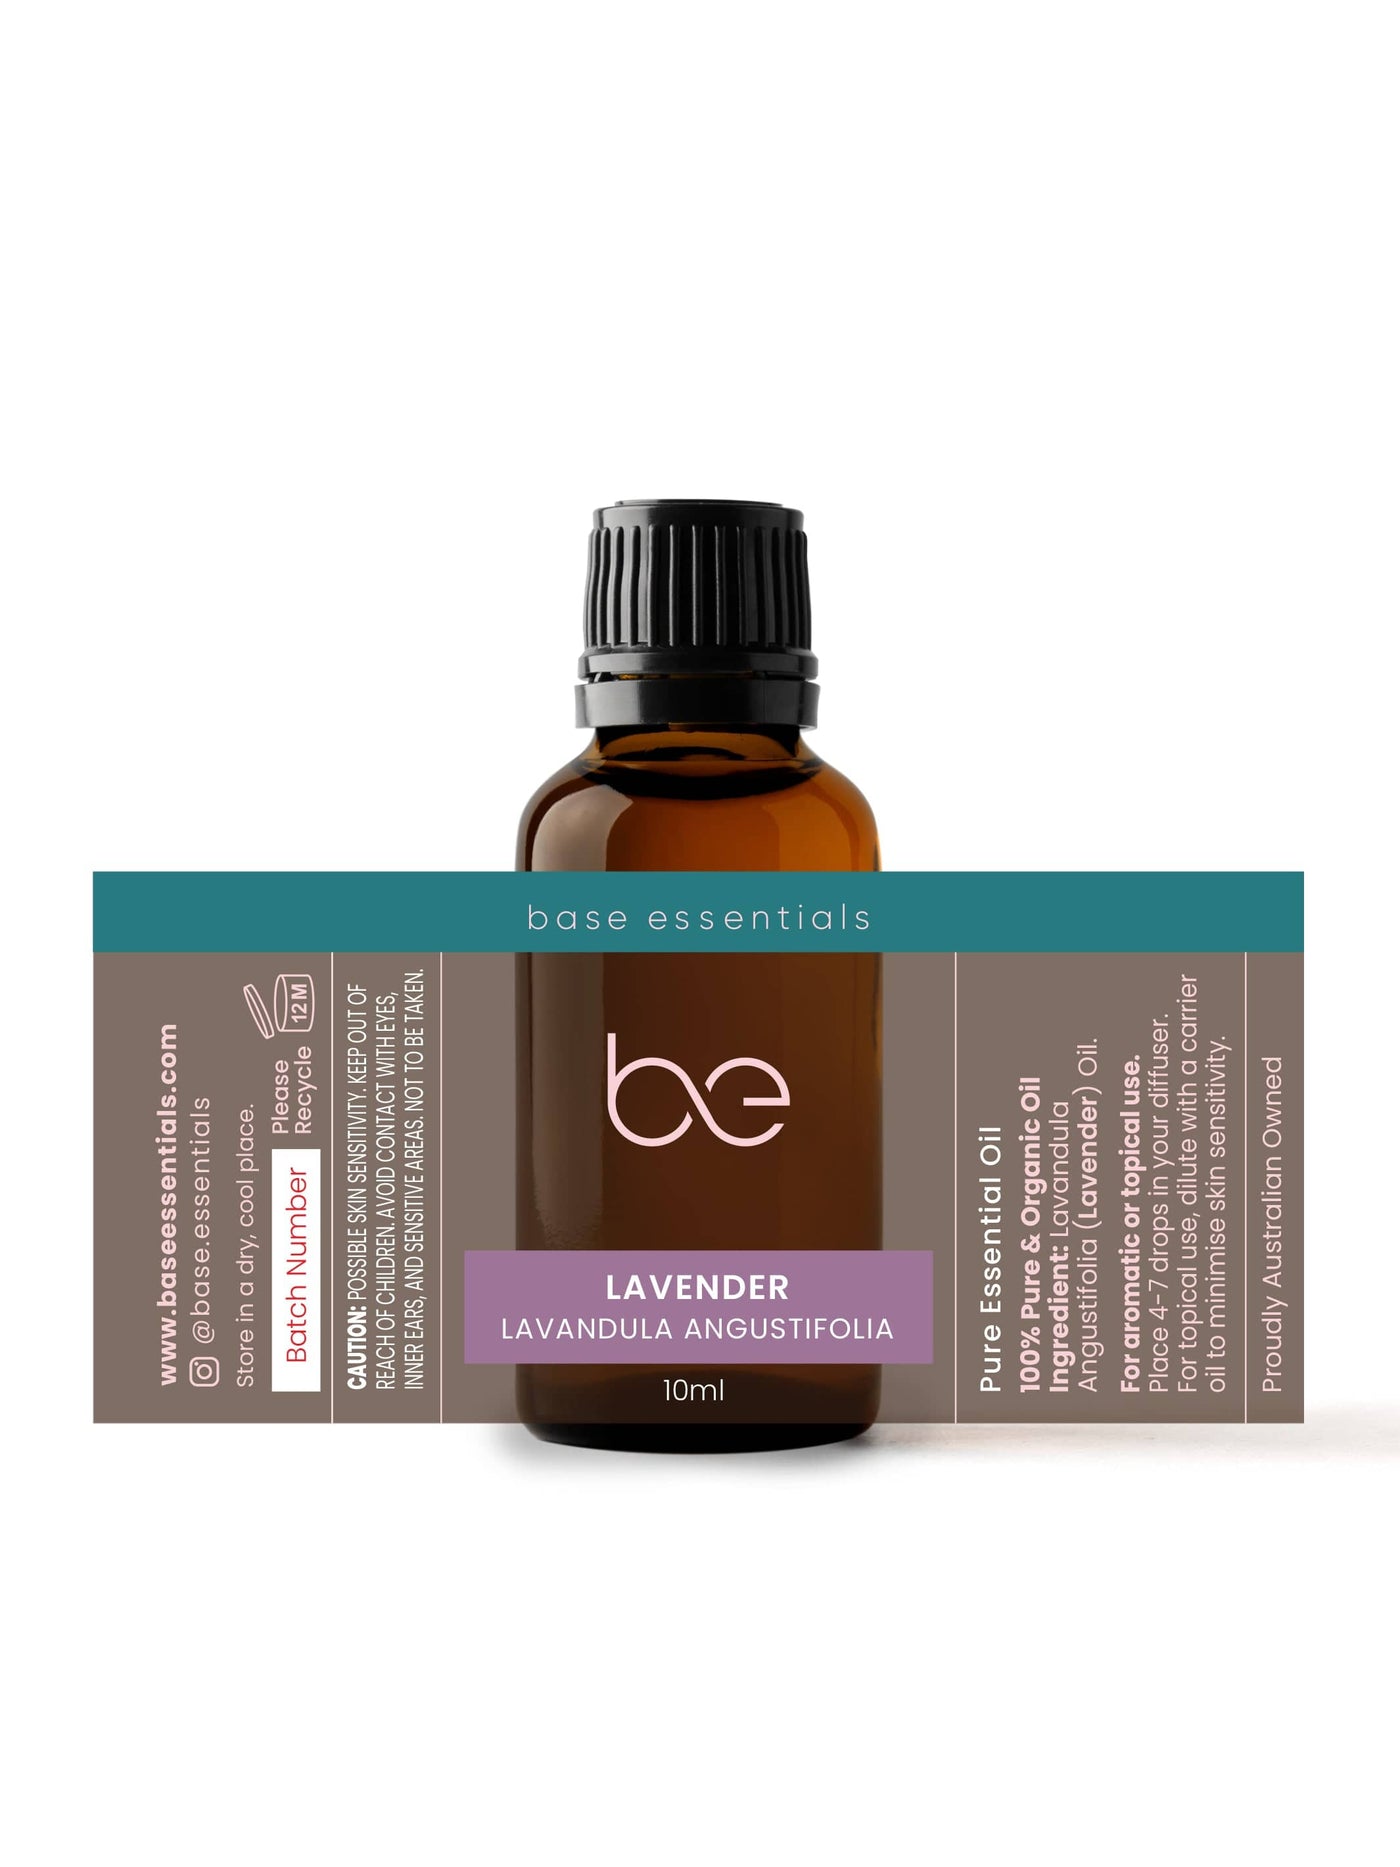 Base Essentials Single Oil Pure Essential Oil Lavender, Organic 10ml